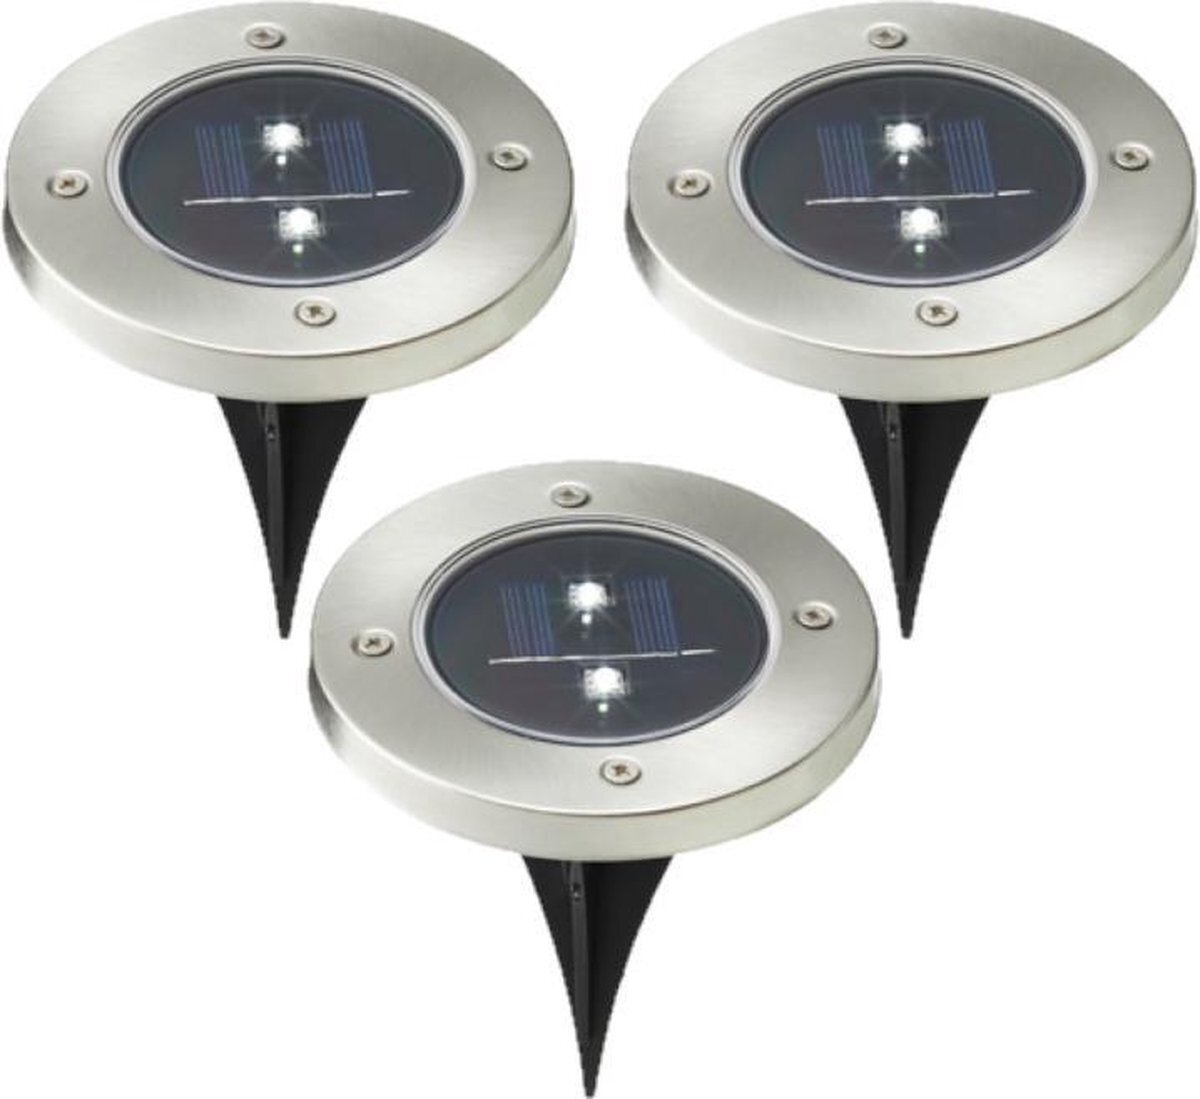 CEPEWA Set van 6x stuks solar tuinlampen/prikspots grondspot op zonne-energie 12 cm RVS - Prikspots tuinverlichting